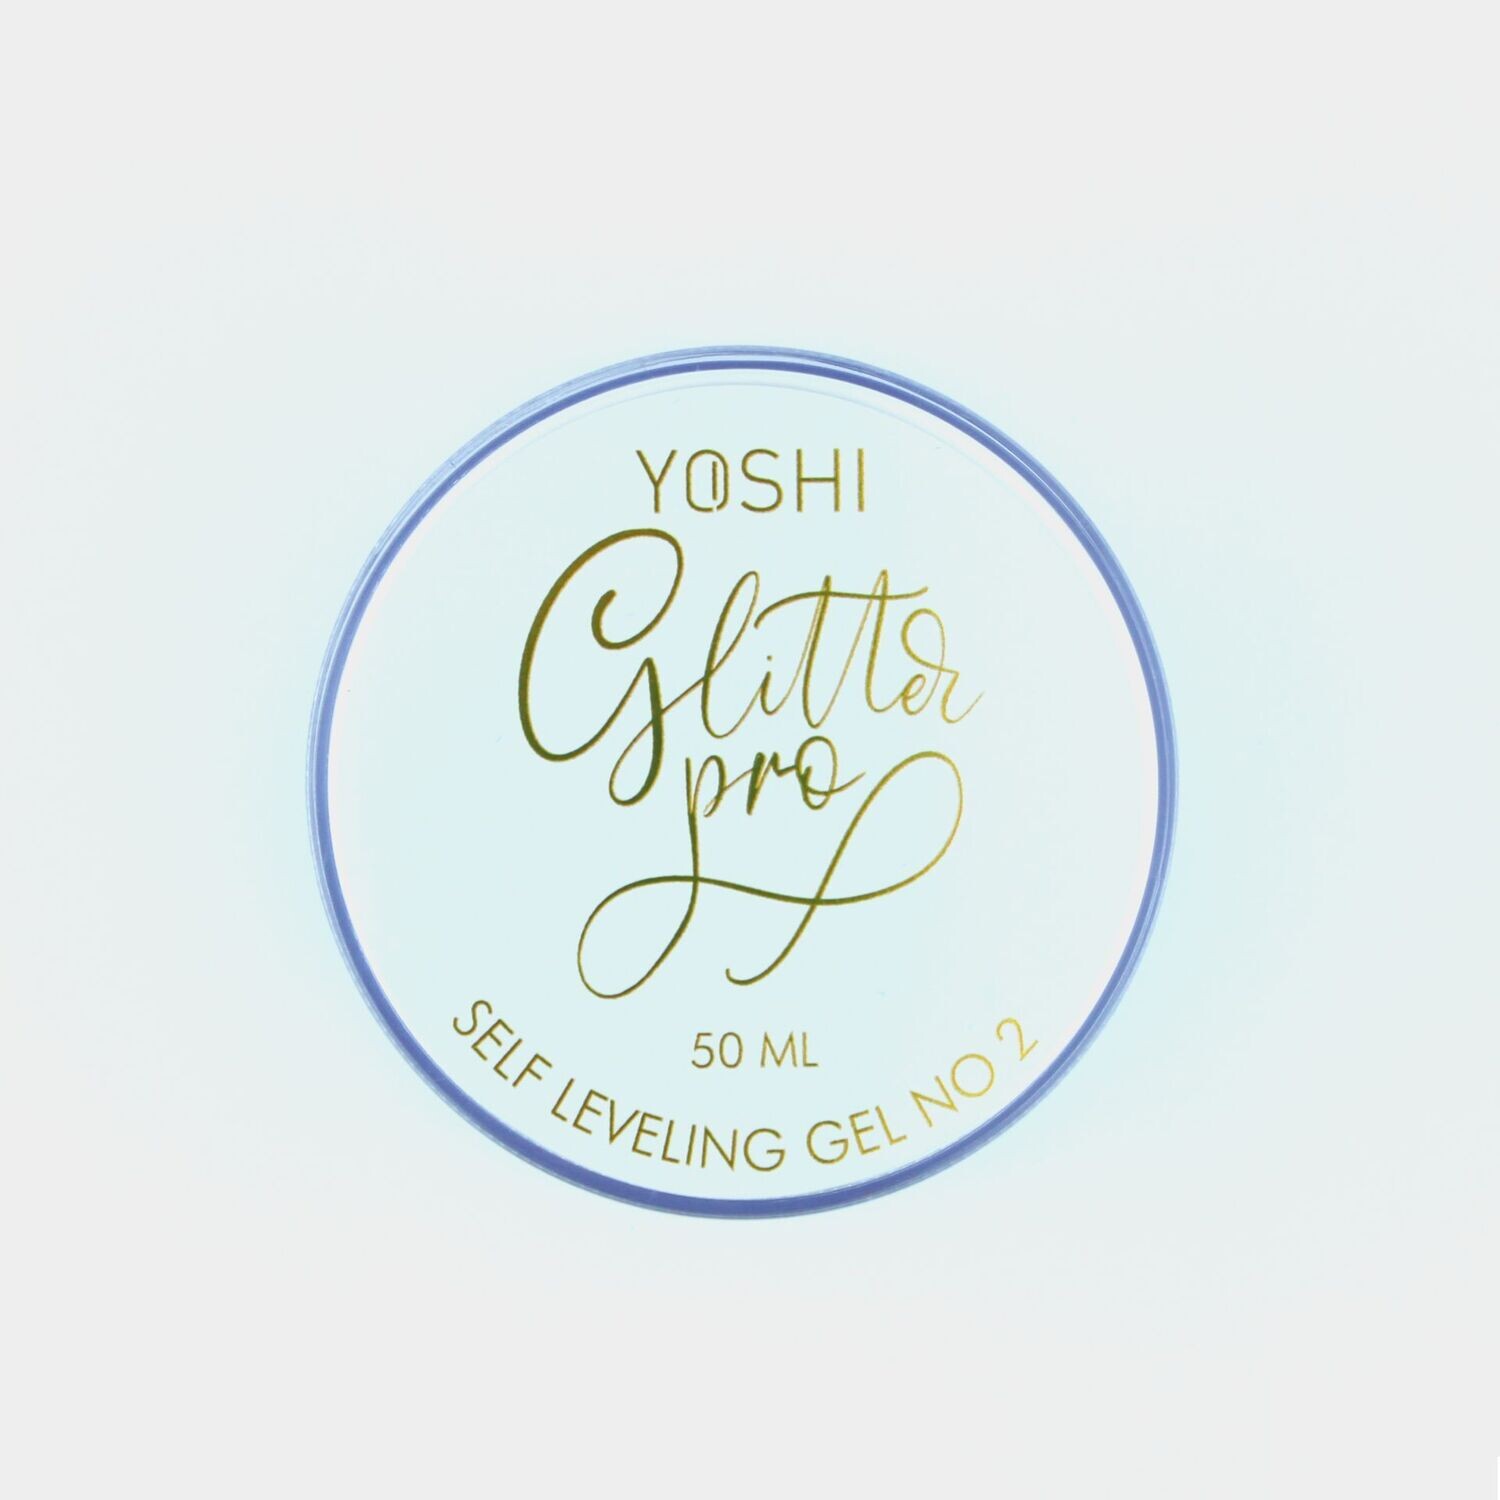 Yoshi Glitter Pro Uv Gel Self Leveling No2 15 ml